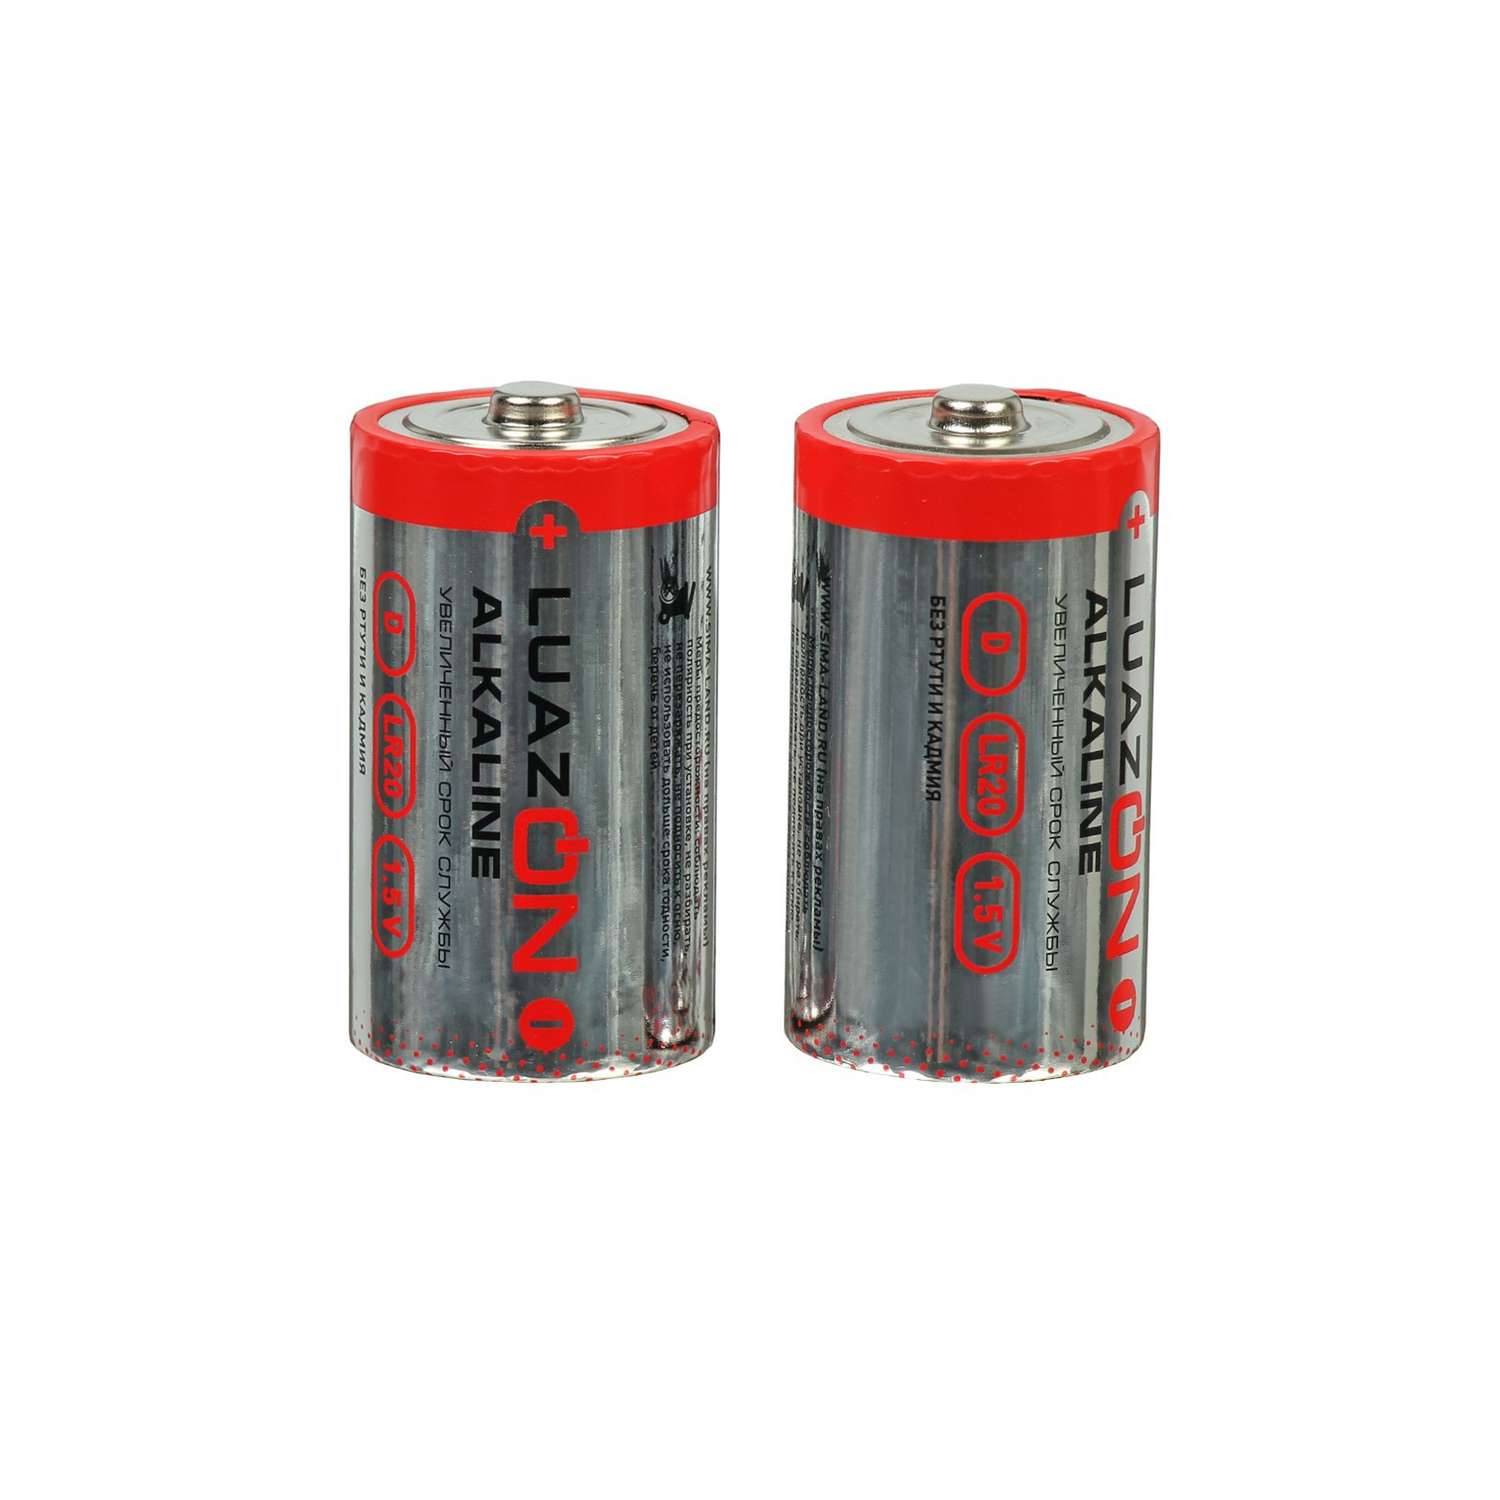 Батарейка Luazon Home алкалиновая (щелочная) Luazon D LR20 блистер 2 шт - фото 5